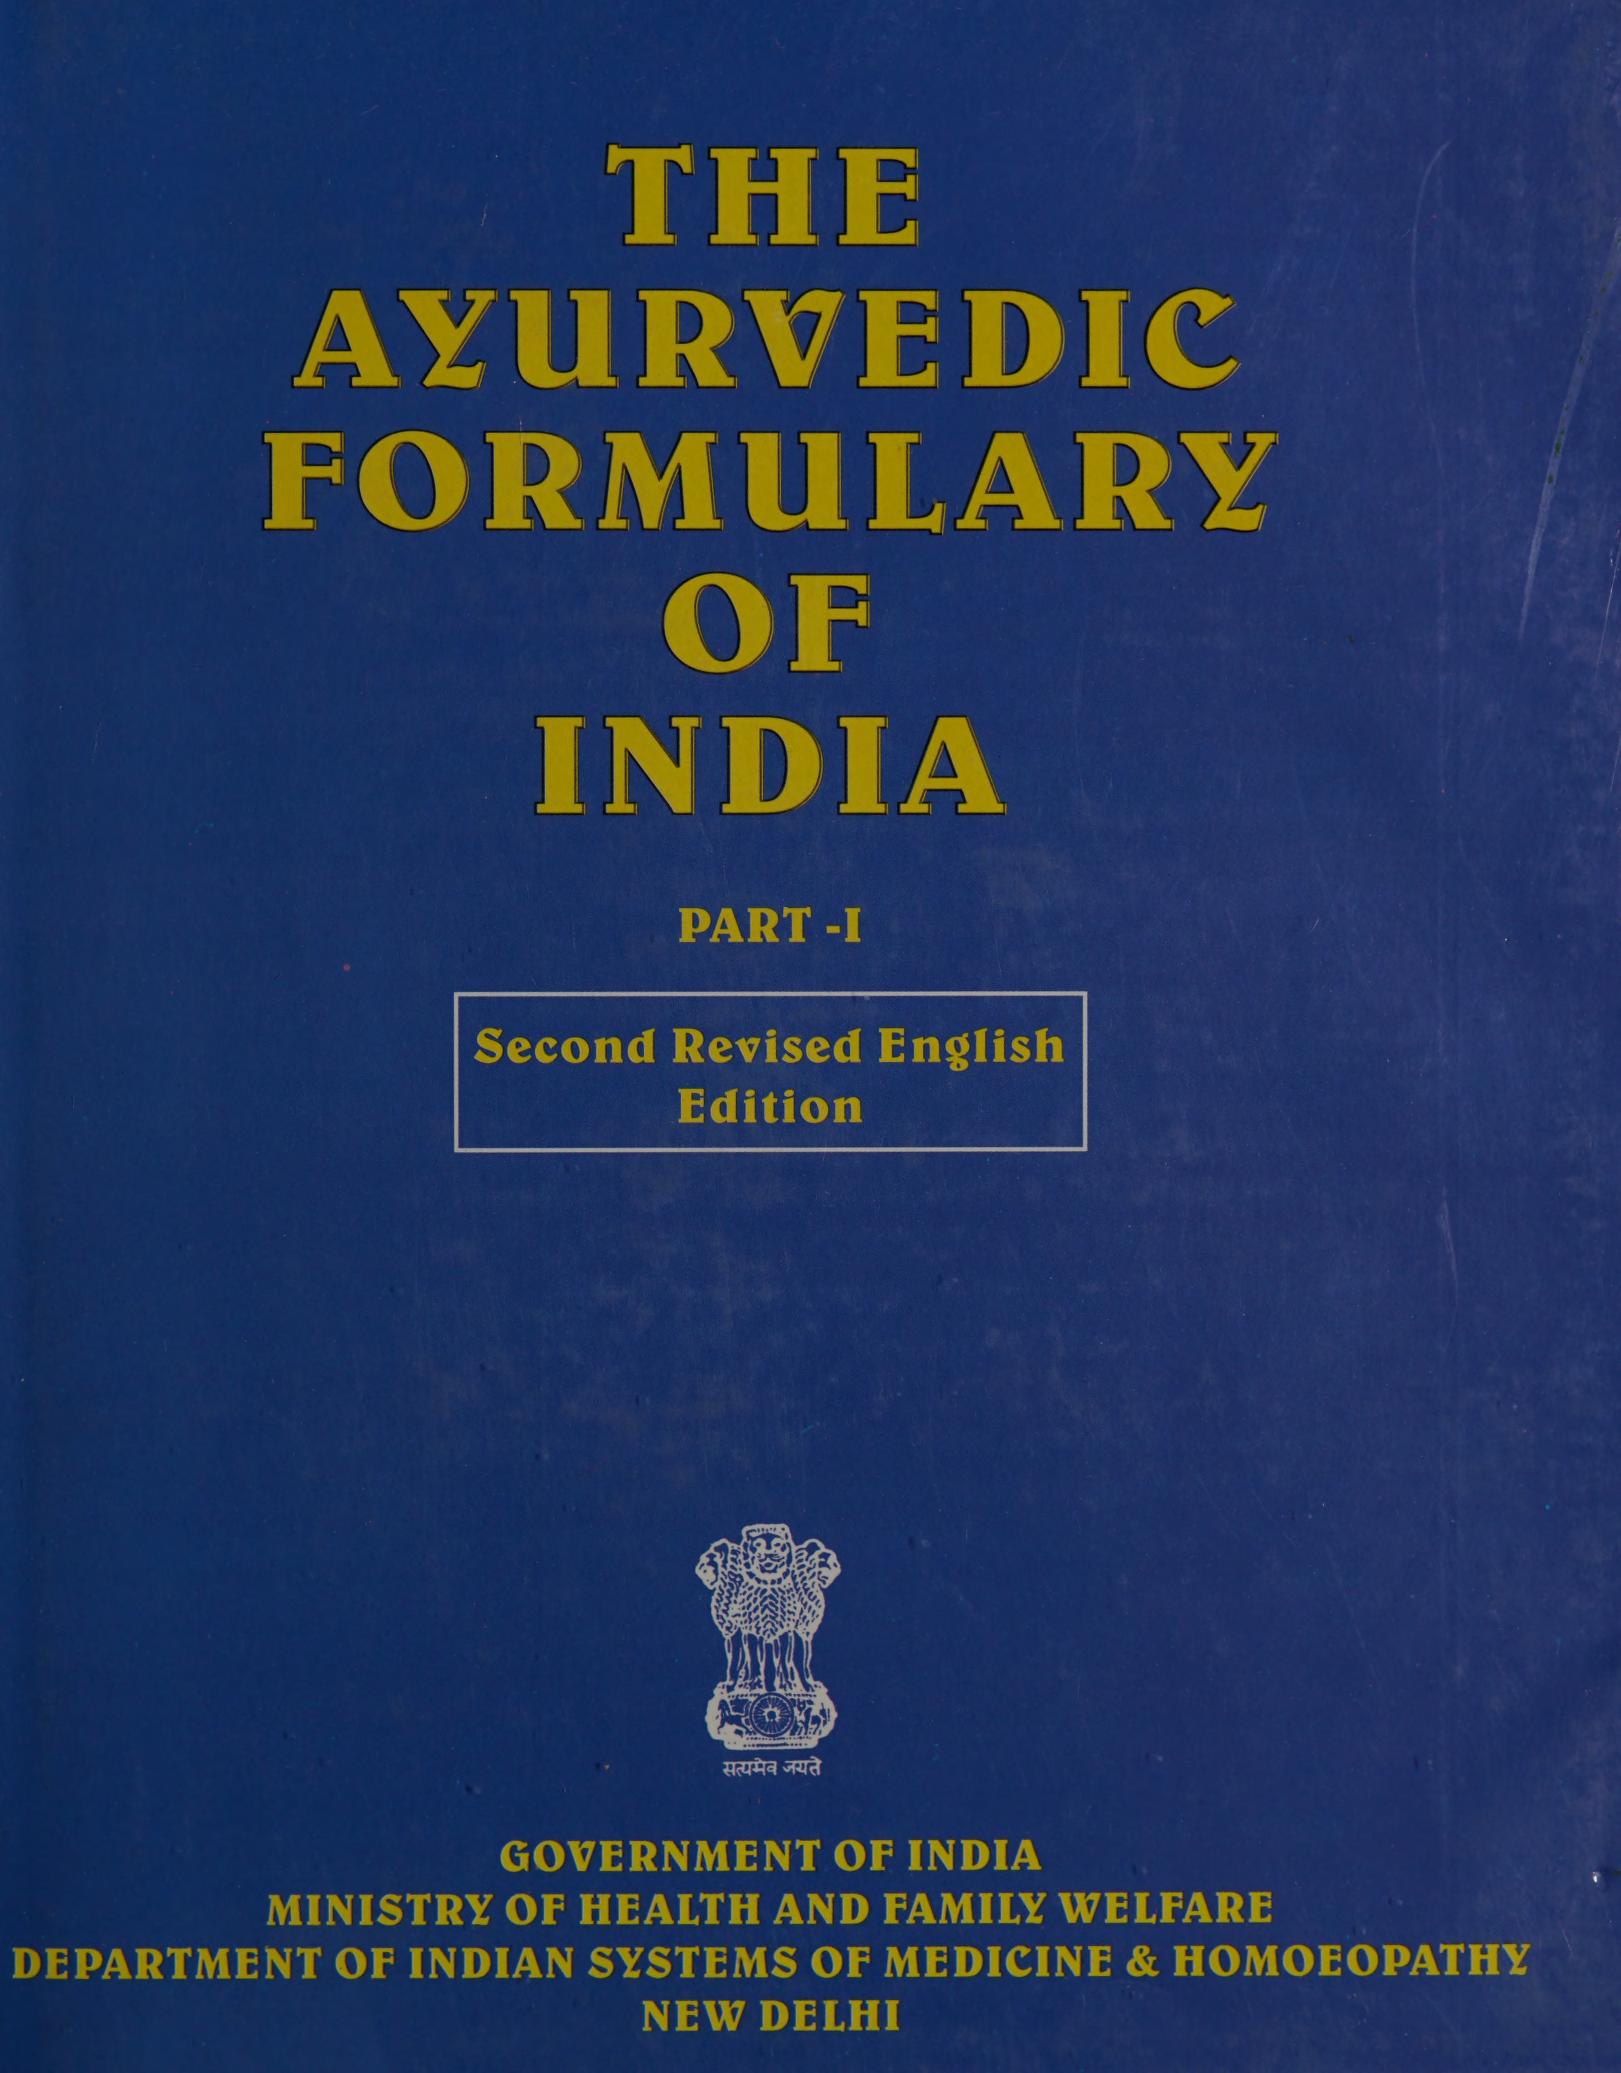 Indian medicine books free download pdf mitsubishi hmi software free download